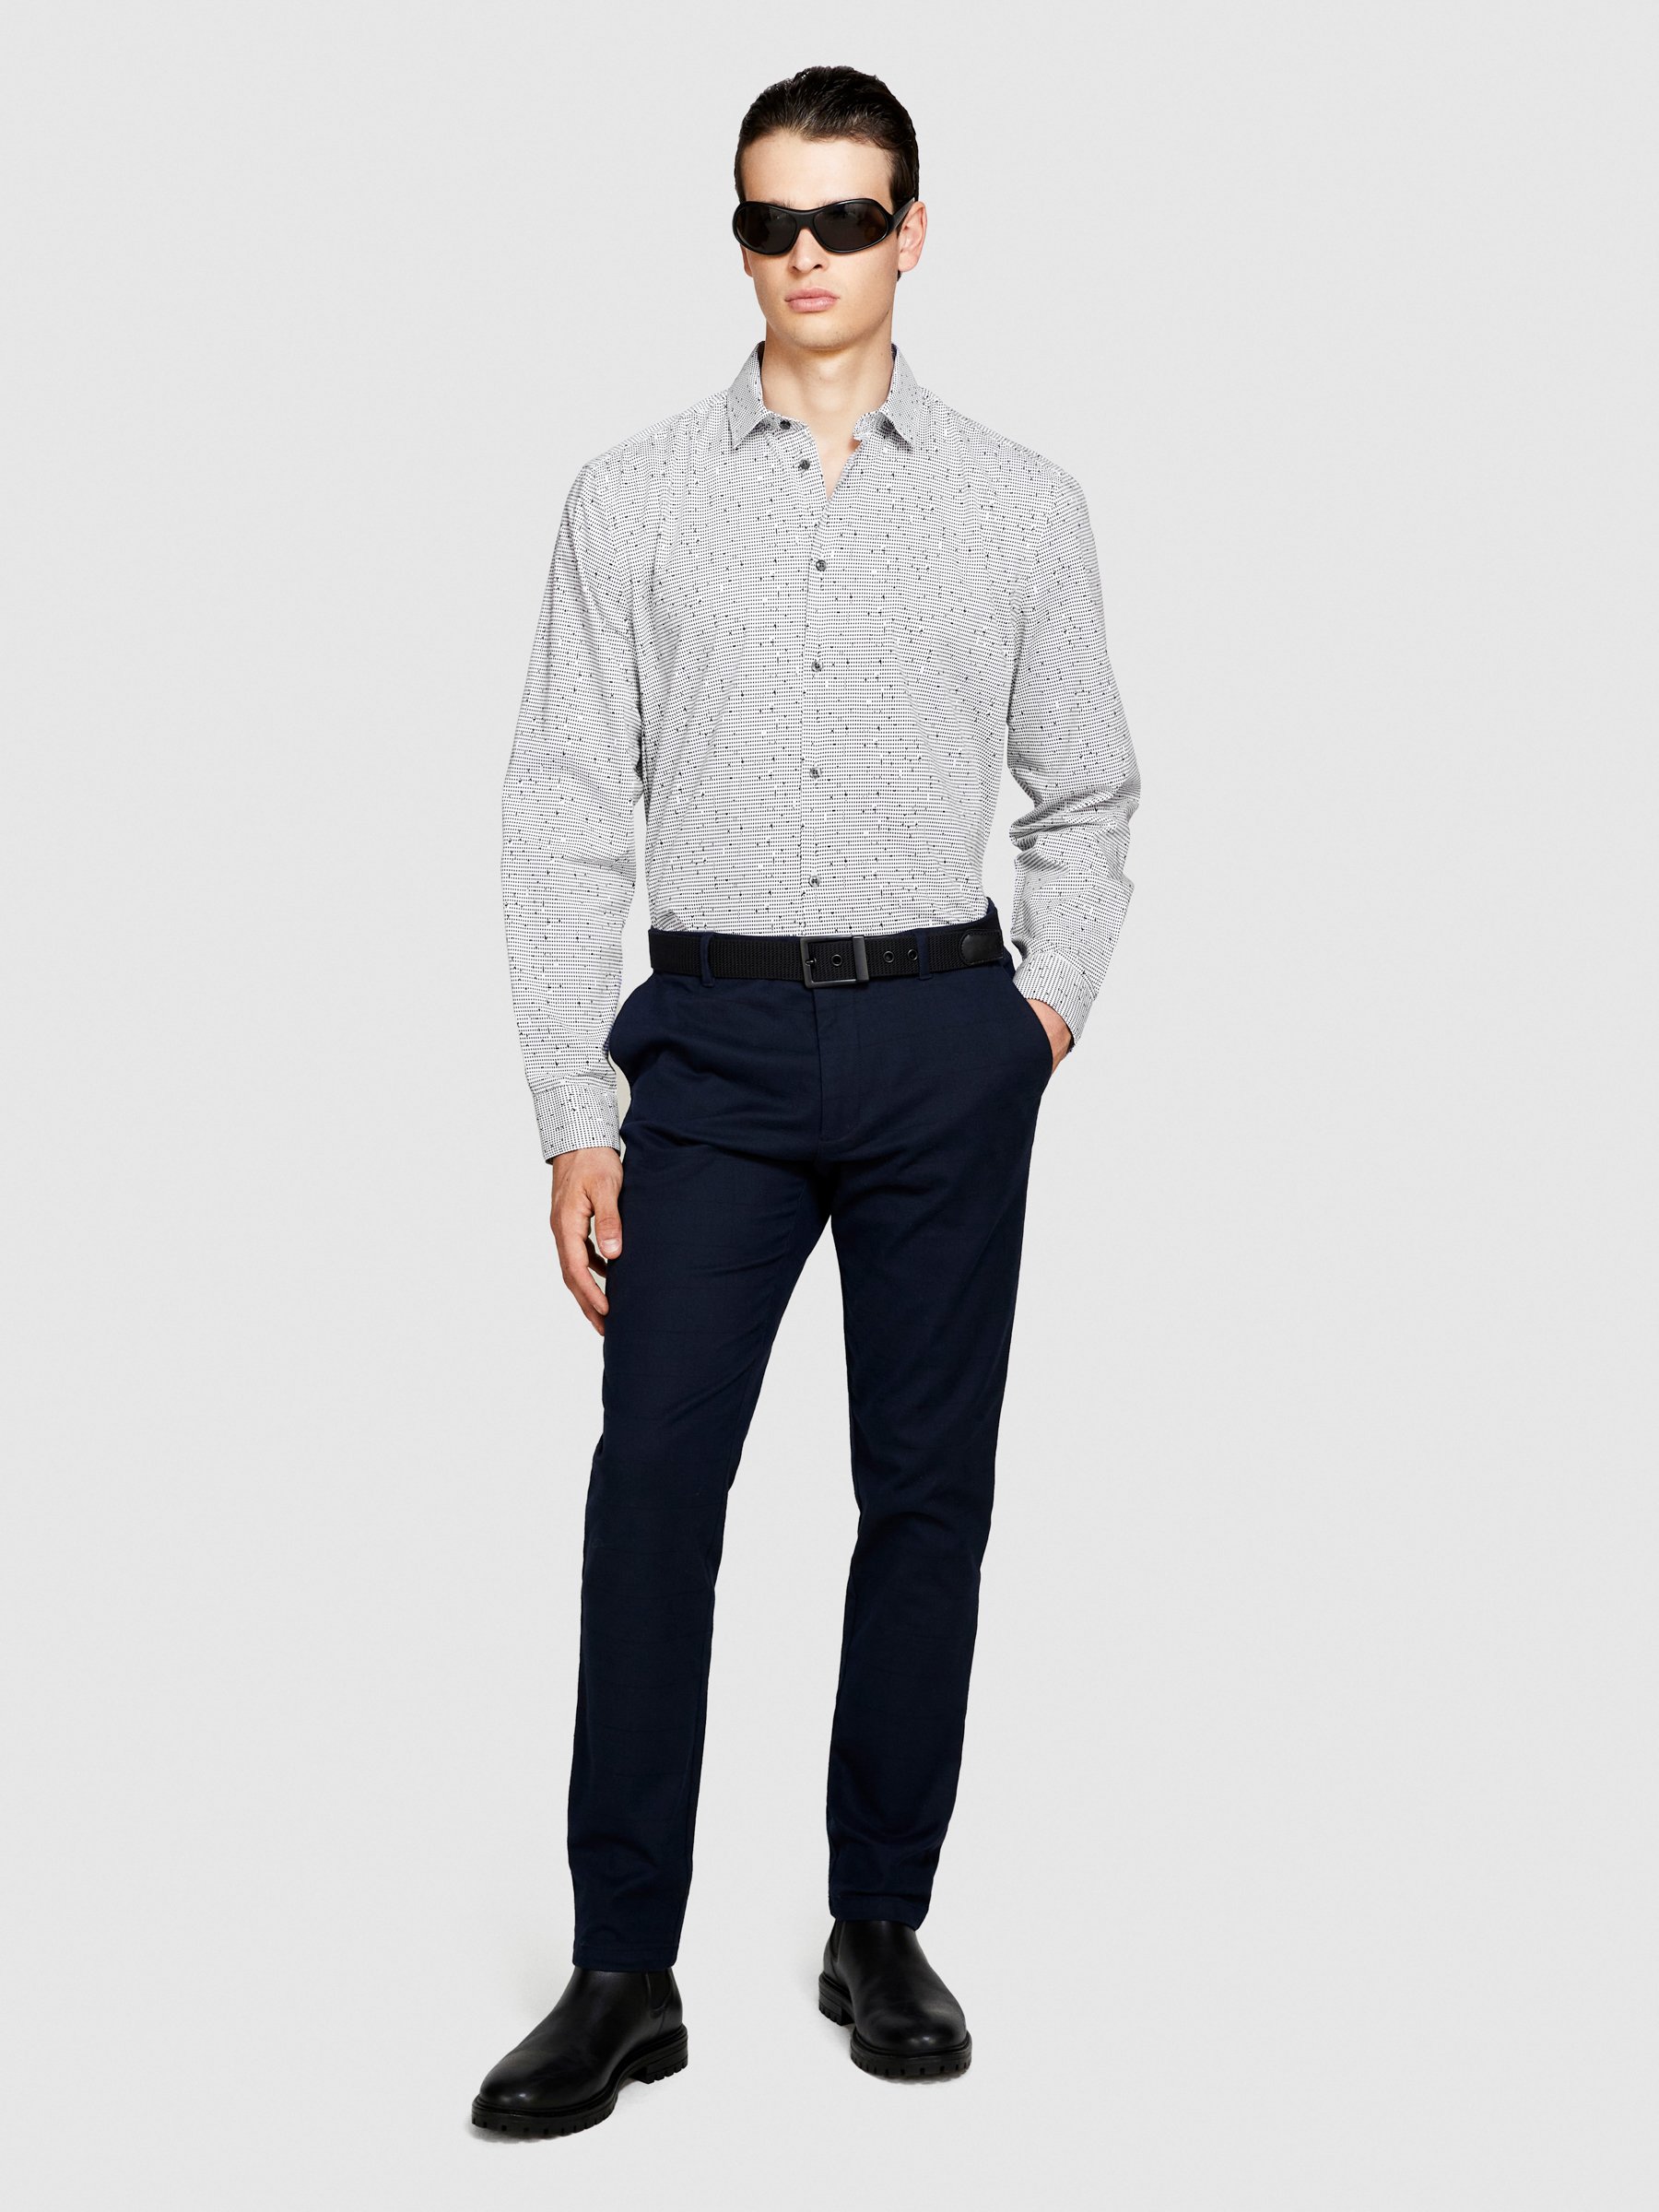 Sisley - Printed Shirt, Man, Gray, Size: S